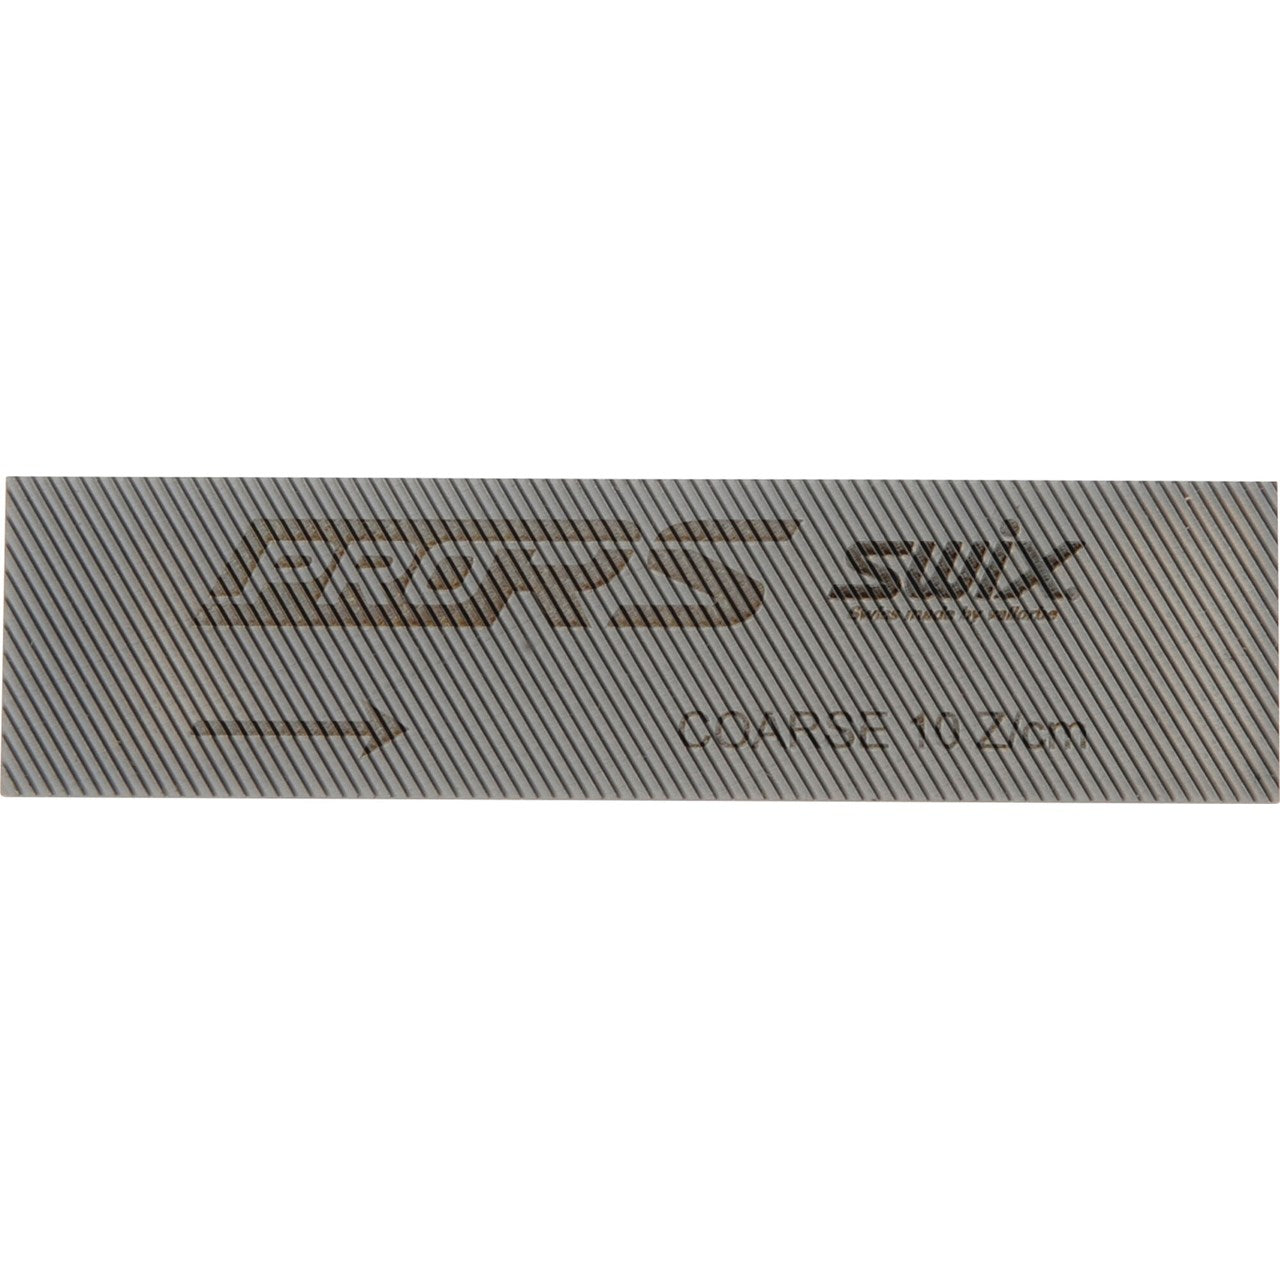 Swix Racing Pro File Coarse - 4"/100mm - 10 TPCm T107RS-Discontinued EDGE TOOLS Swix   